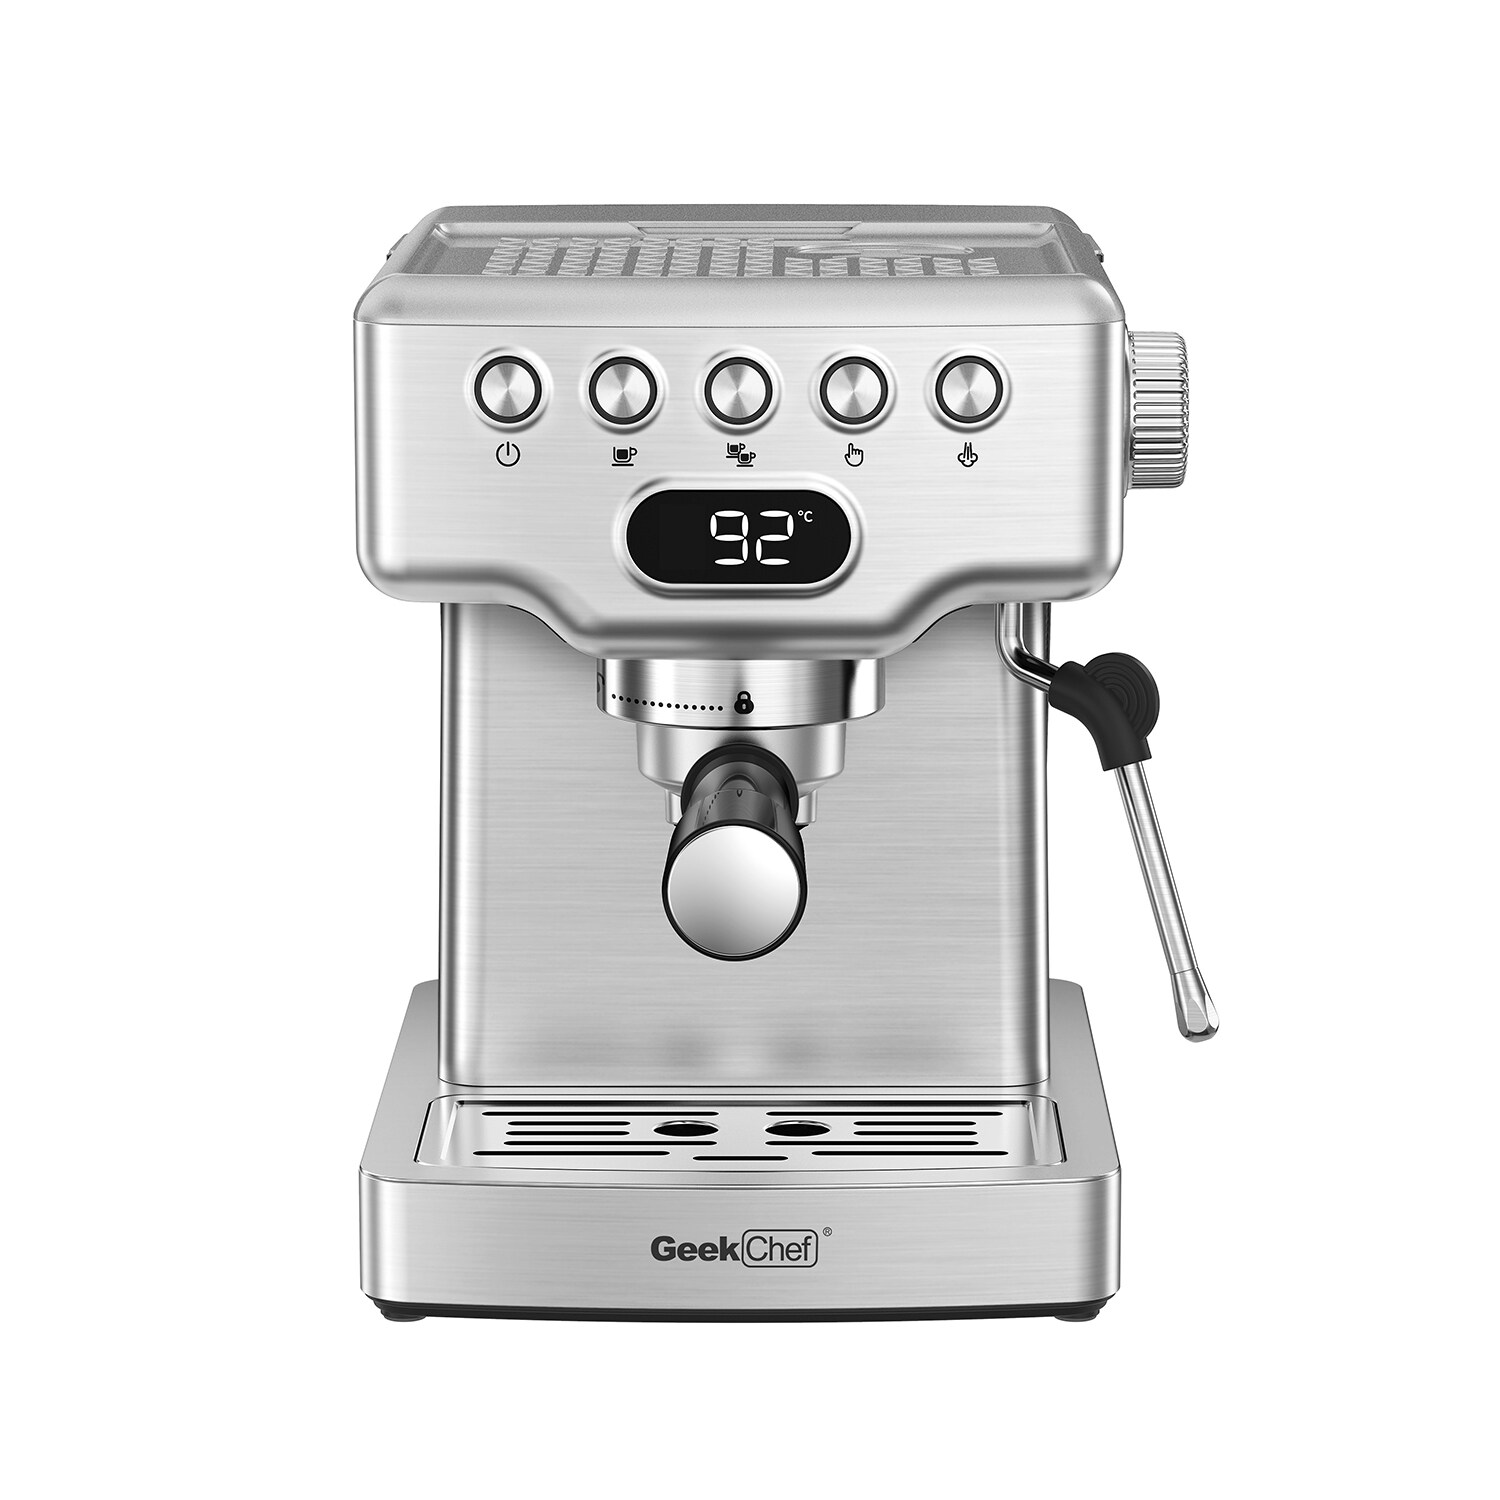 Cecotec Power Espresso 20 Square Pro Cafetera Espresso 20 Bares